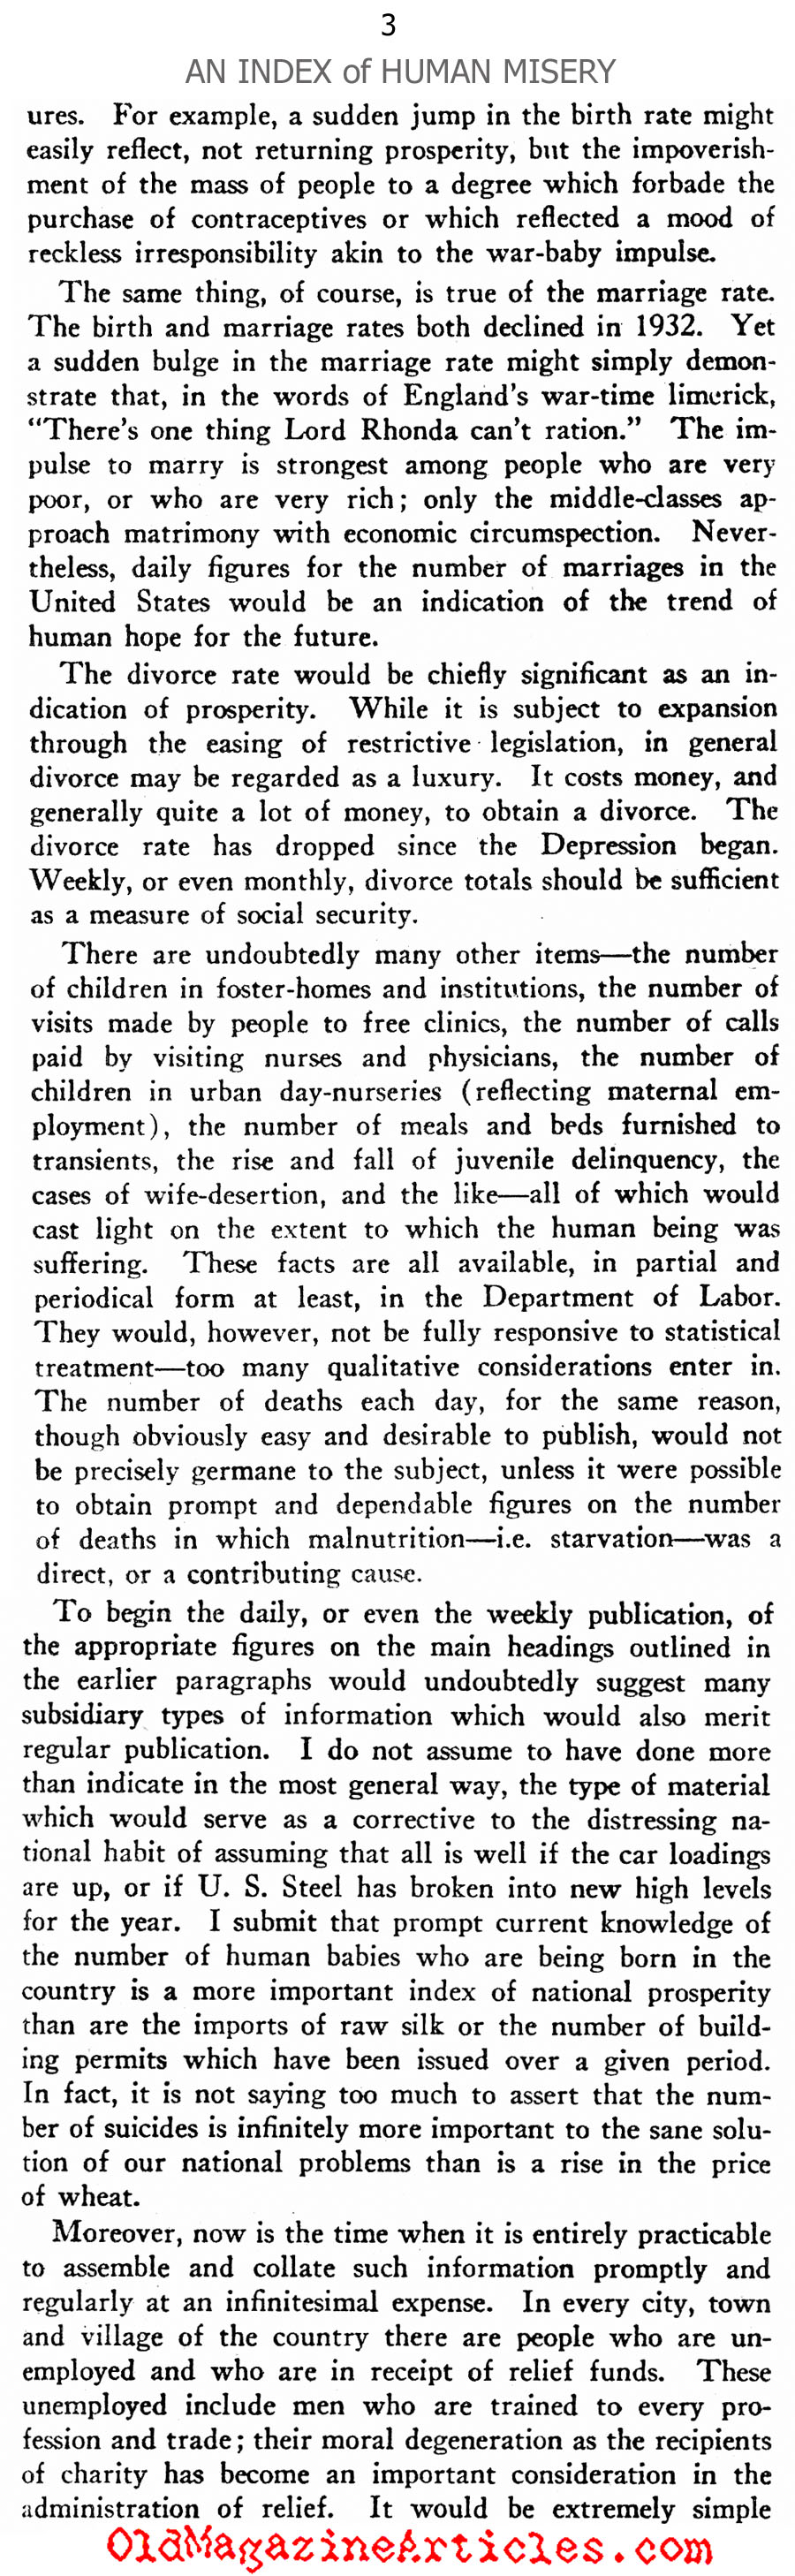 Establishing A Misery Index  (New Outlook Magazine, 1933)